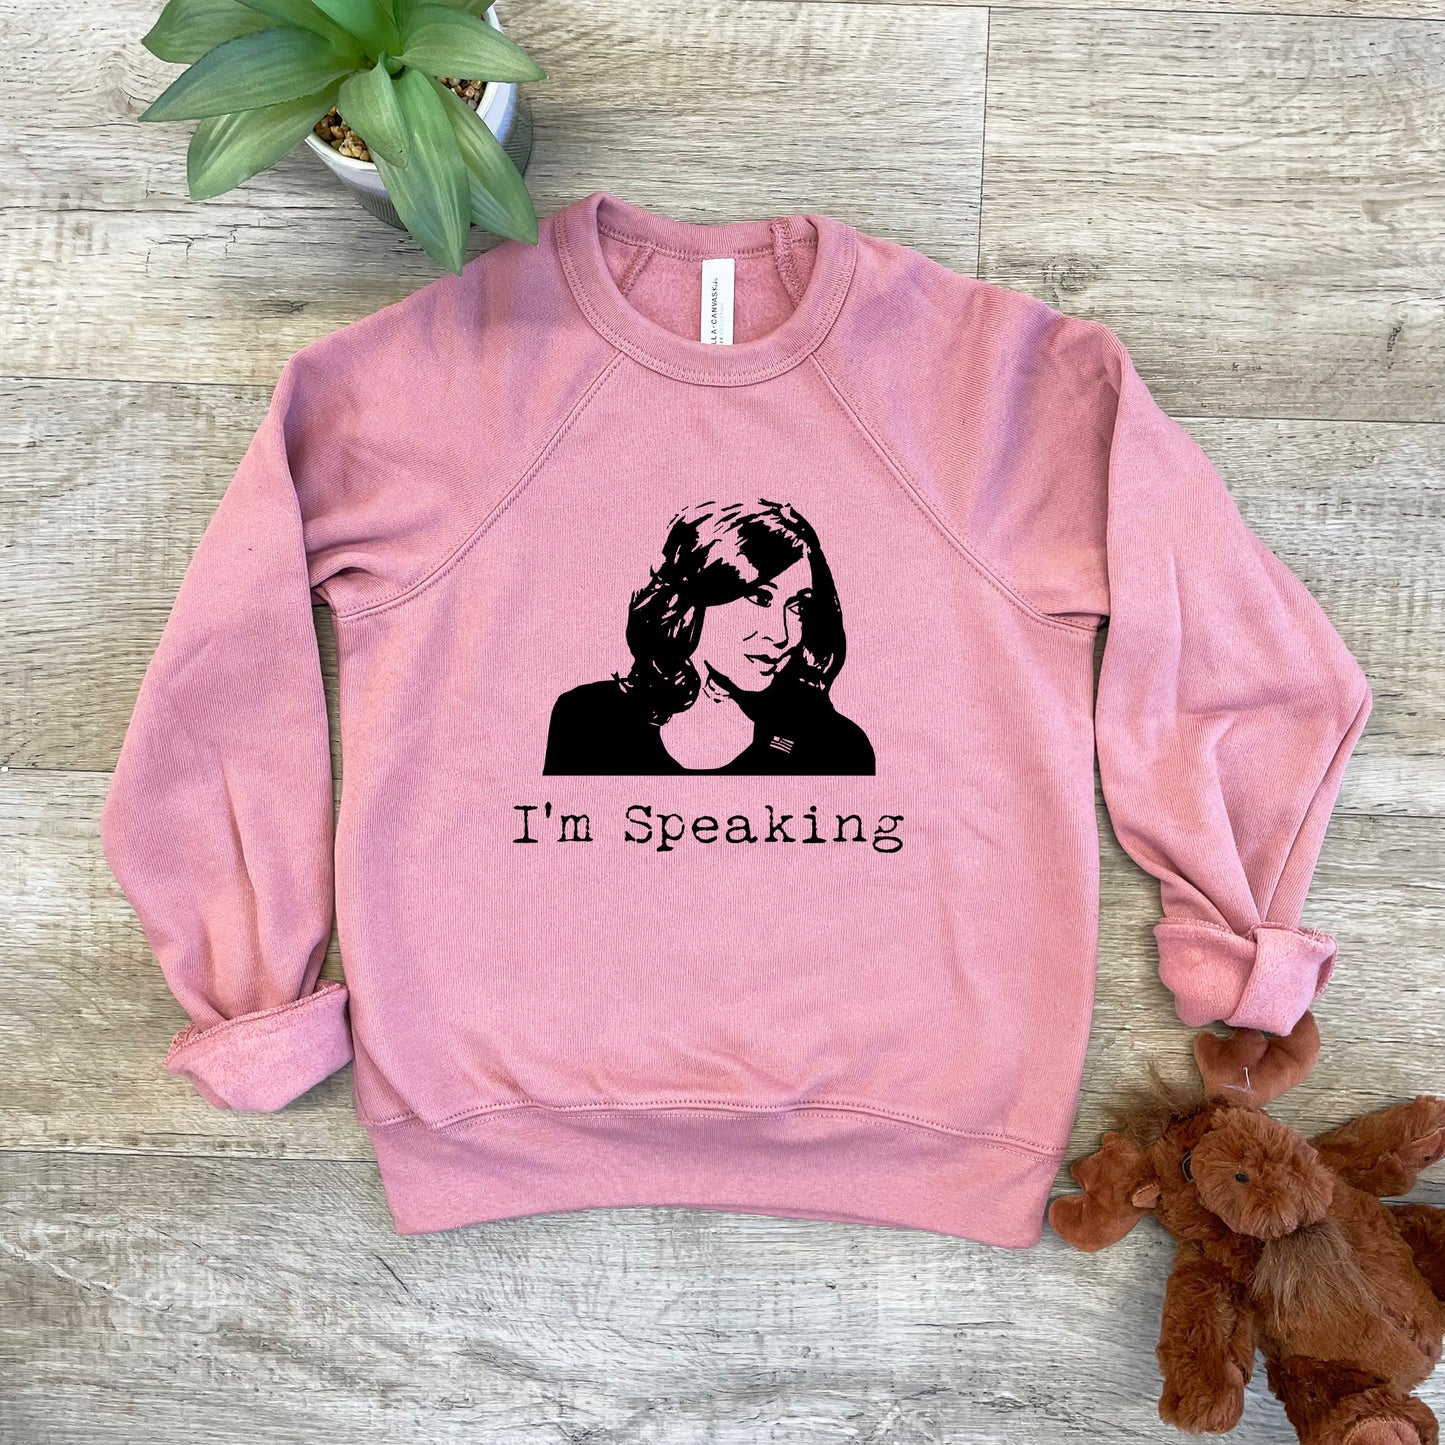 I'm Speaking (Kamala Harris) - Kid's Sweatshirt - Heather Gray or Mauve